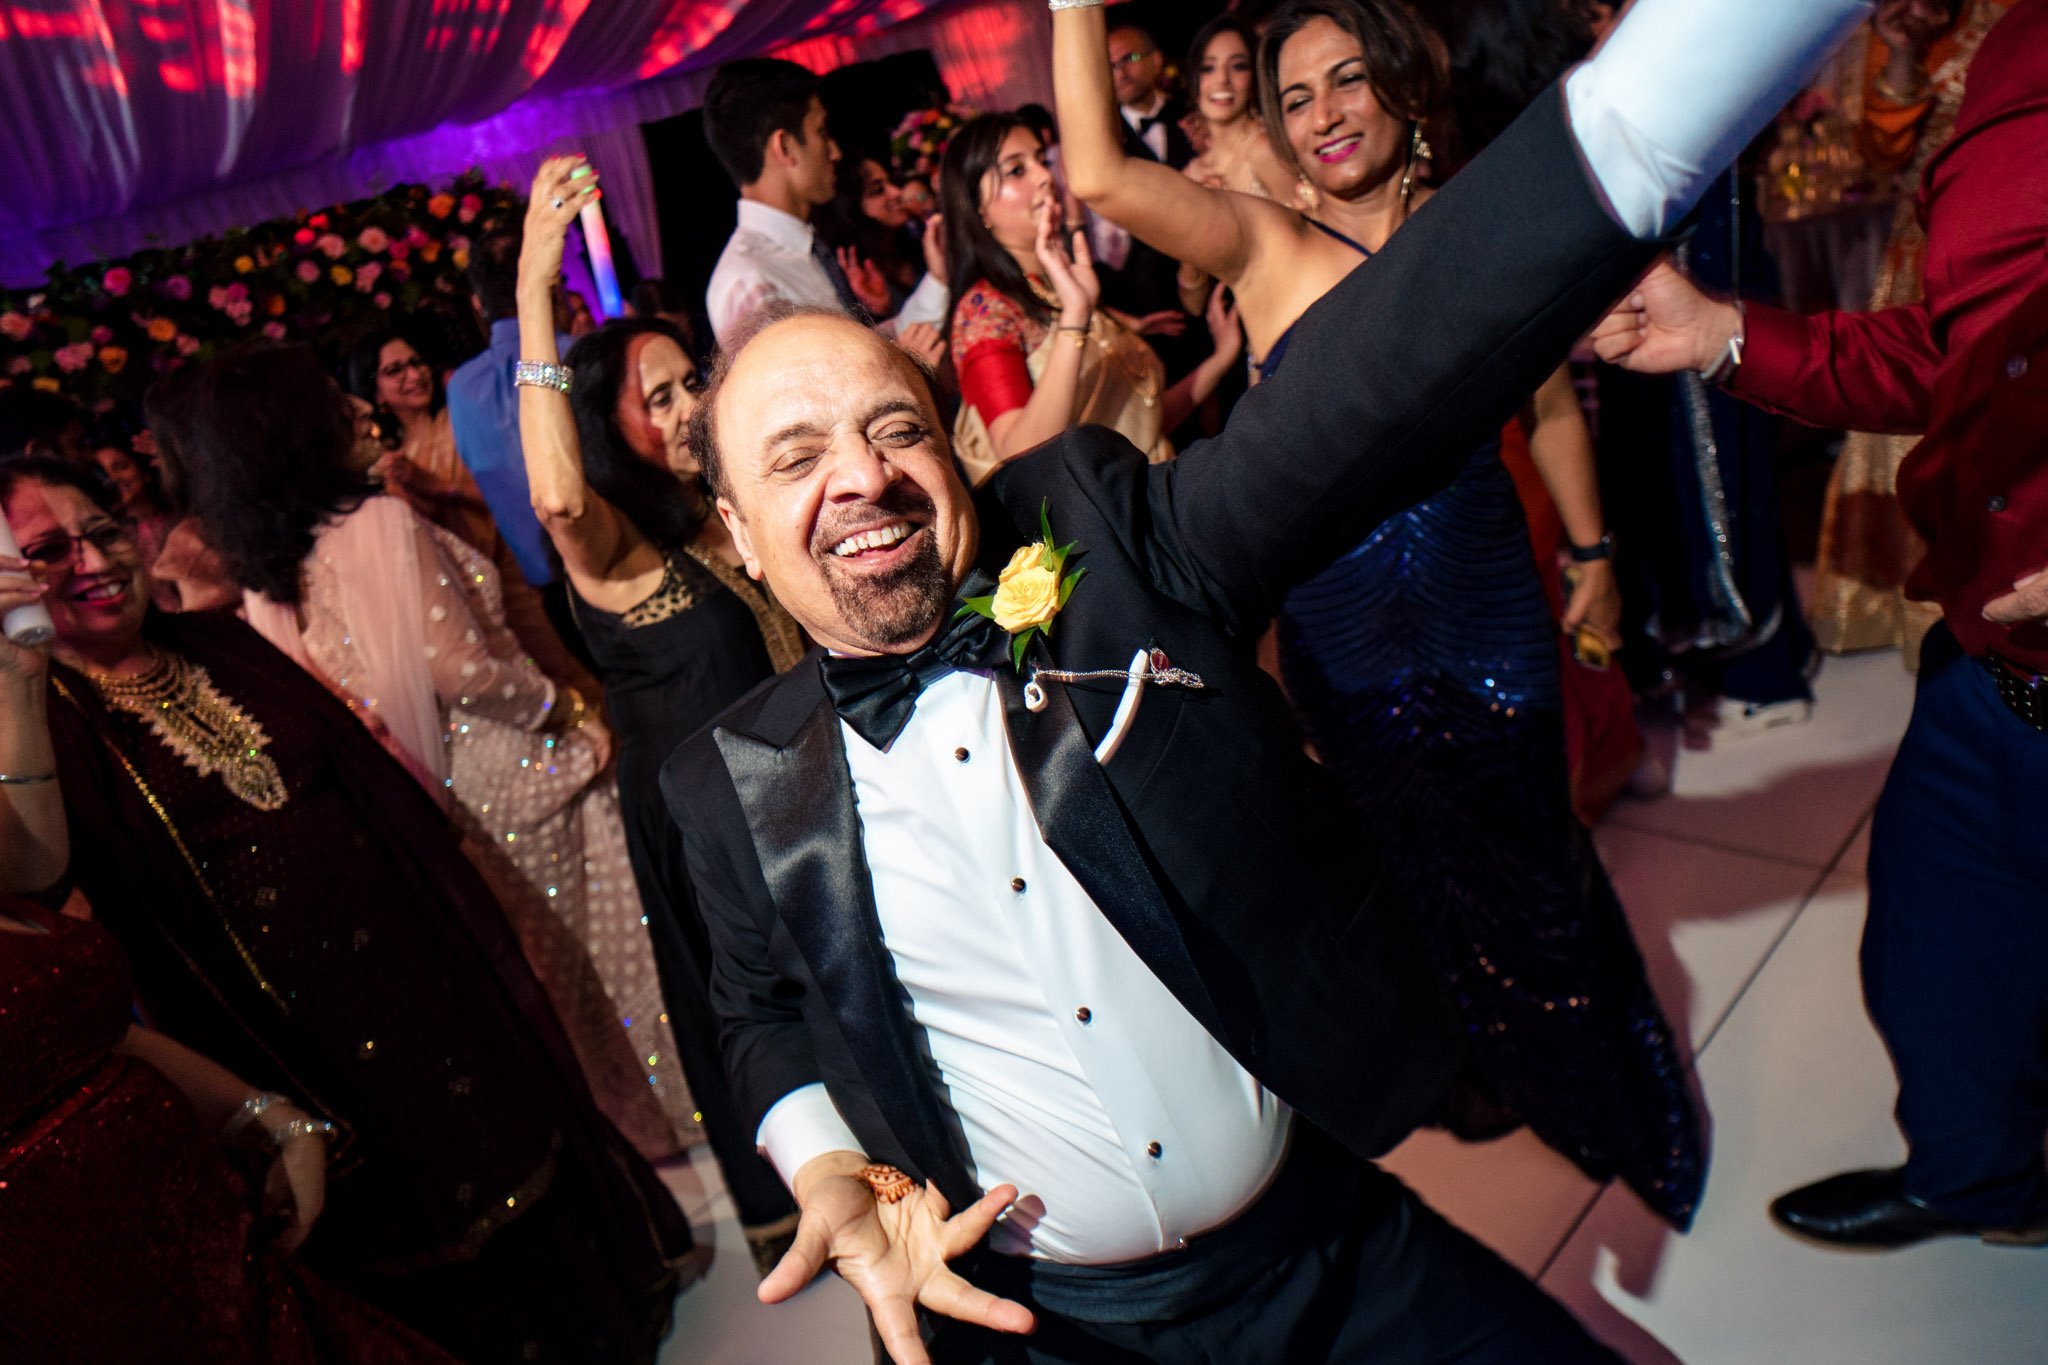 A man in a tuxedo dancing at a Biltmore Estate wedding reception.